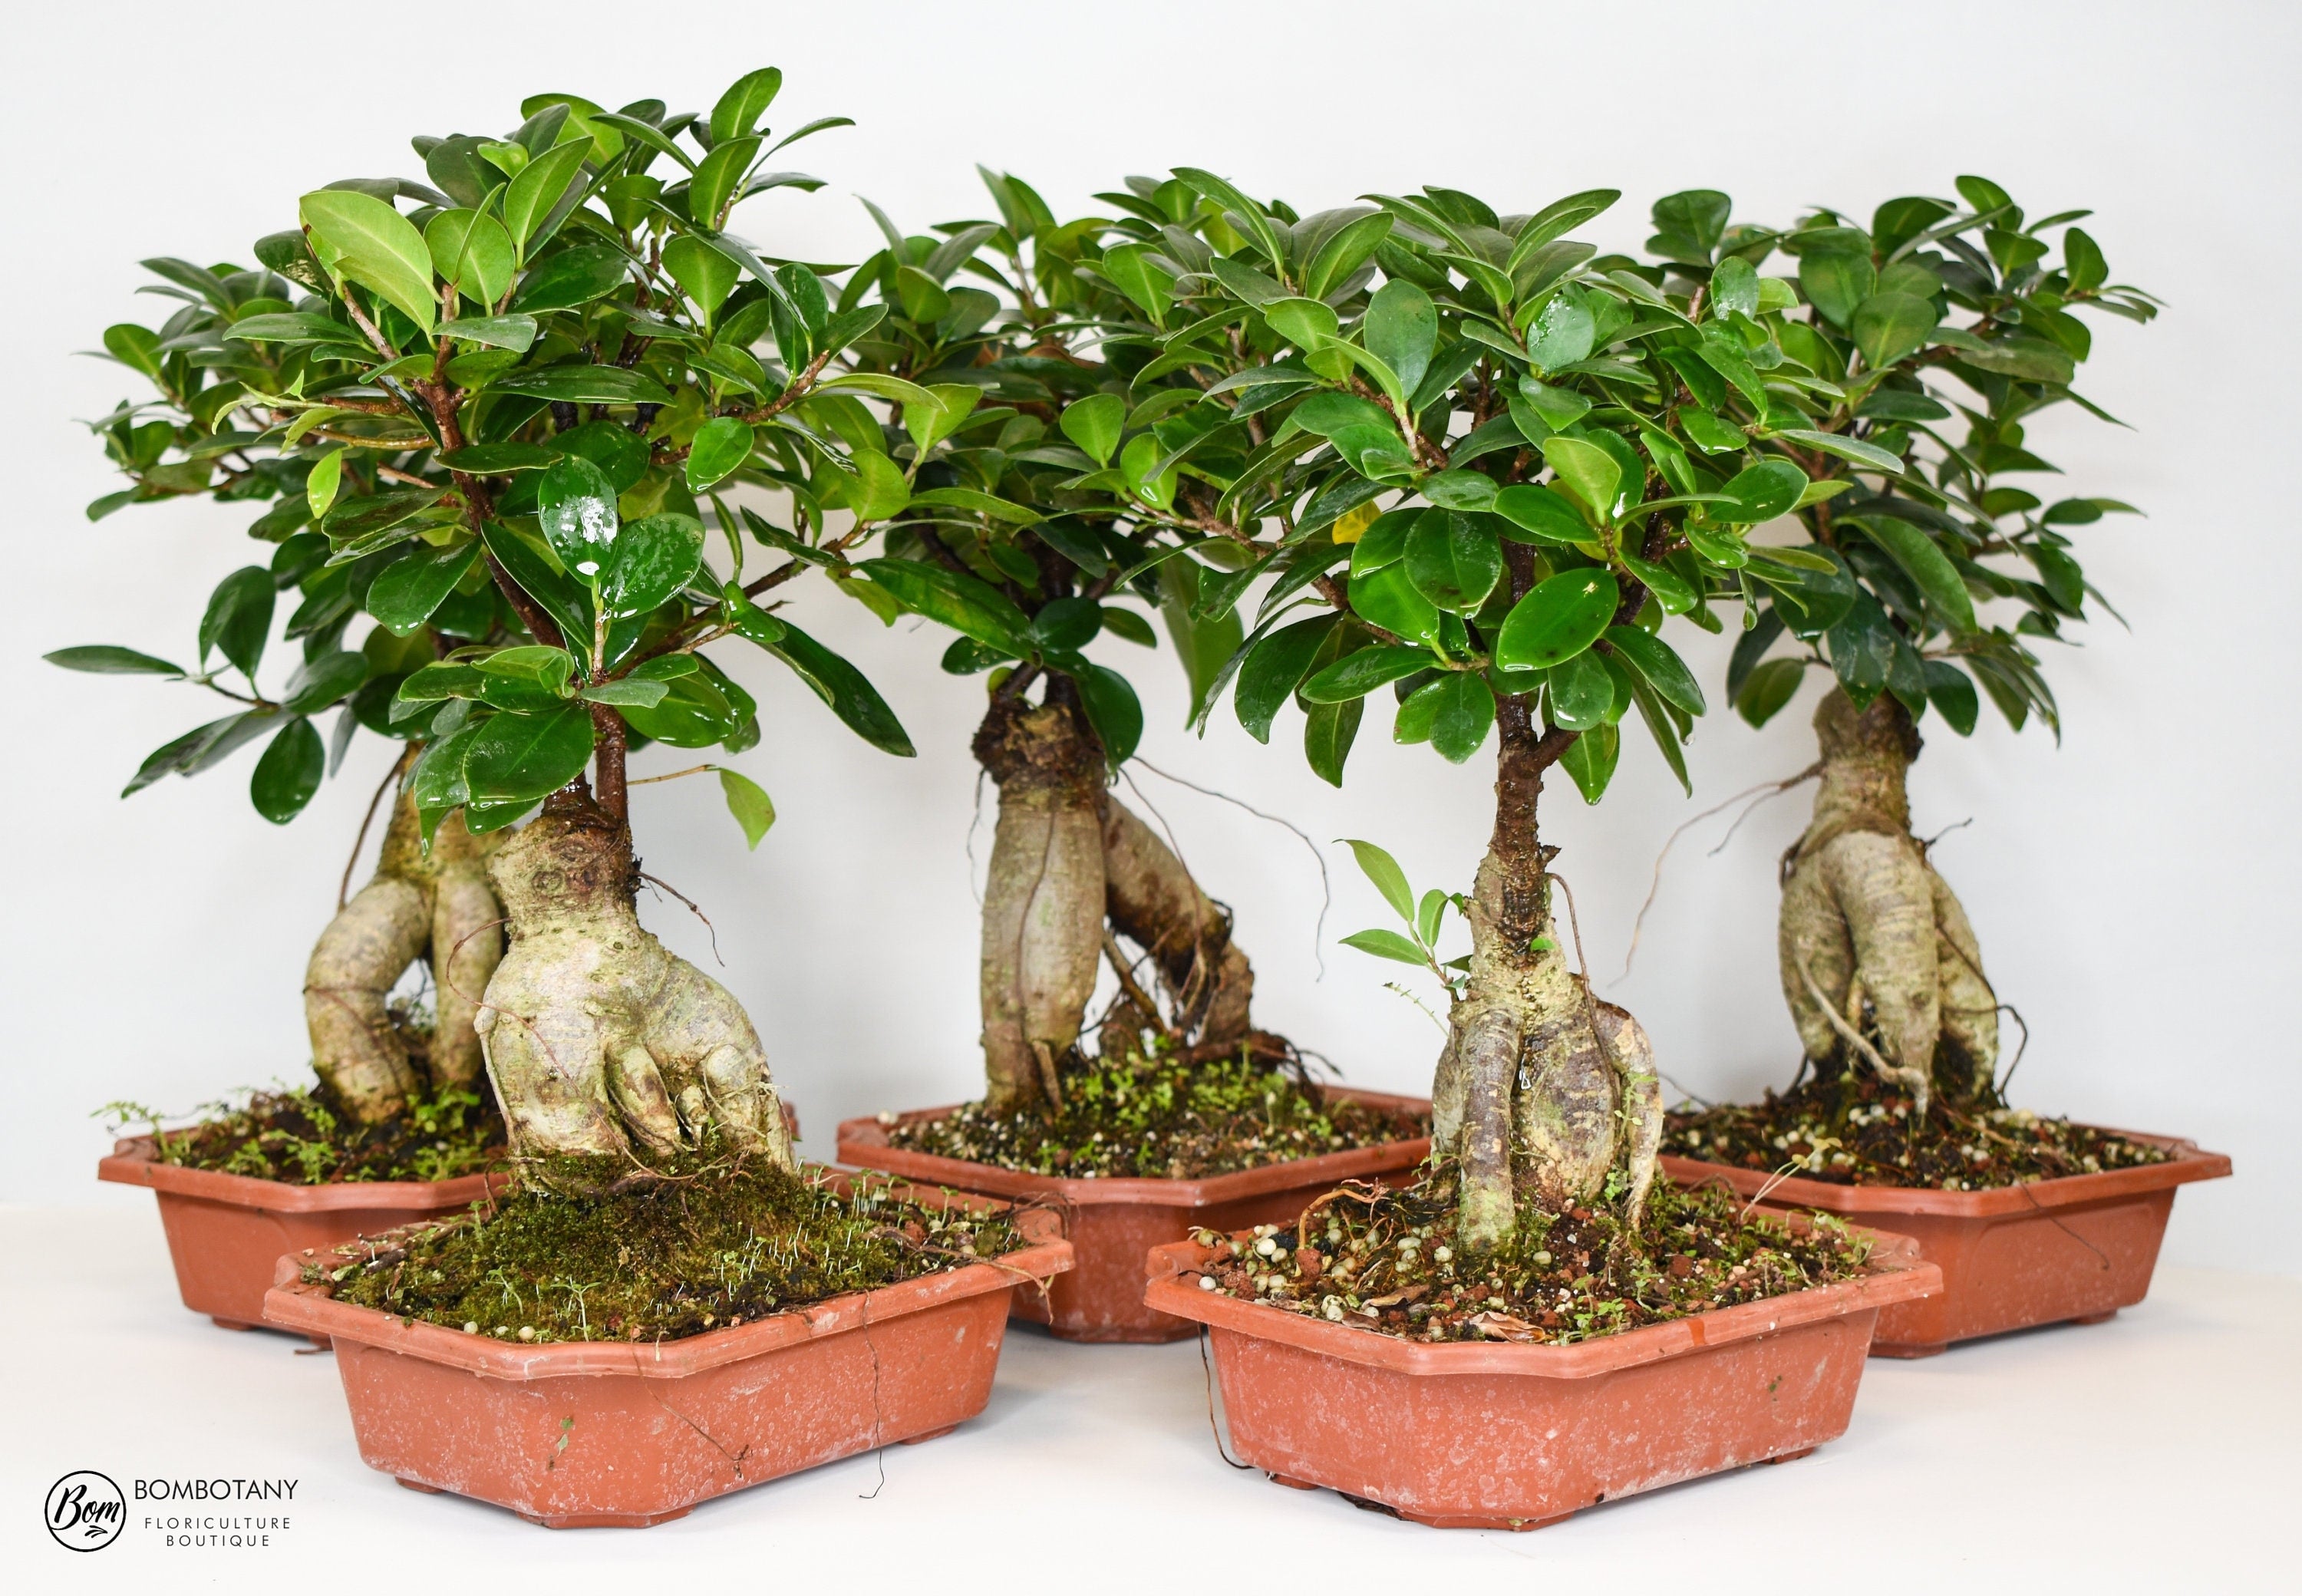 – Pot XL bombotany in Ficus Ginseng Bonsai Plant 7\